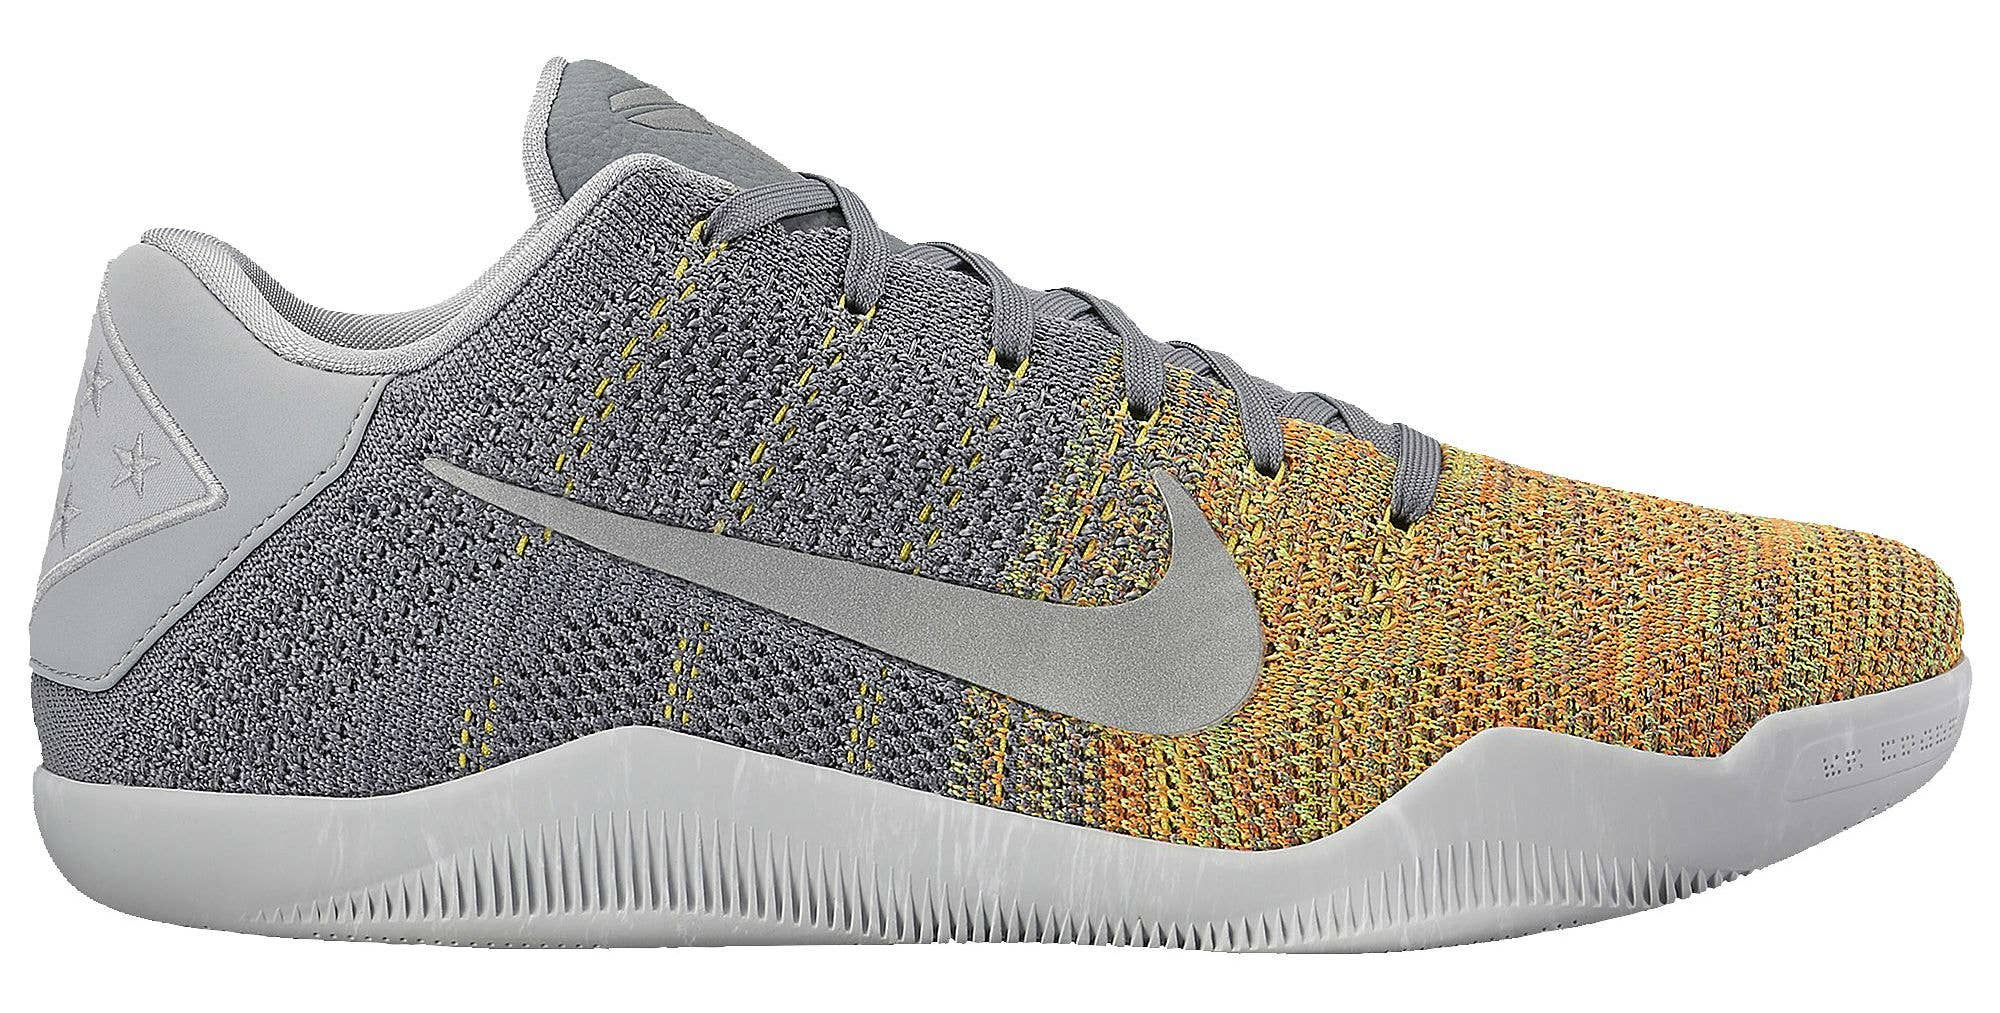 Nike Kobe 11 Elite Low Cool Grey/Multicolor Release Date 822675 037 (1)